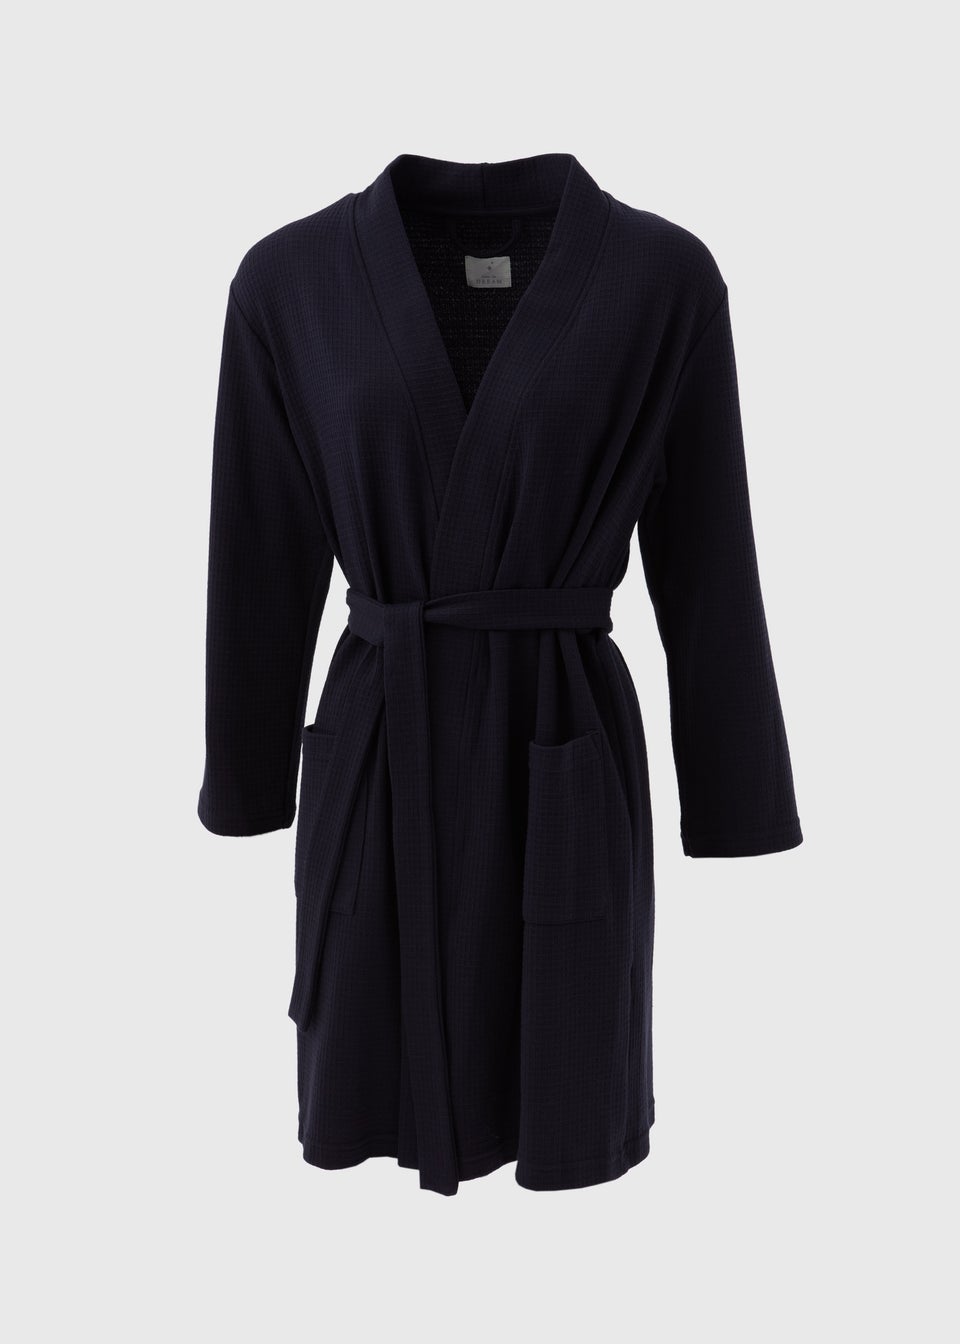 Womens Snuggle Fleece Dressing Gown Robes Extra Long Cuddly Plush Bathrobe  Gowns | eBay